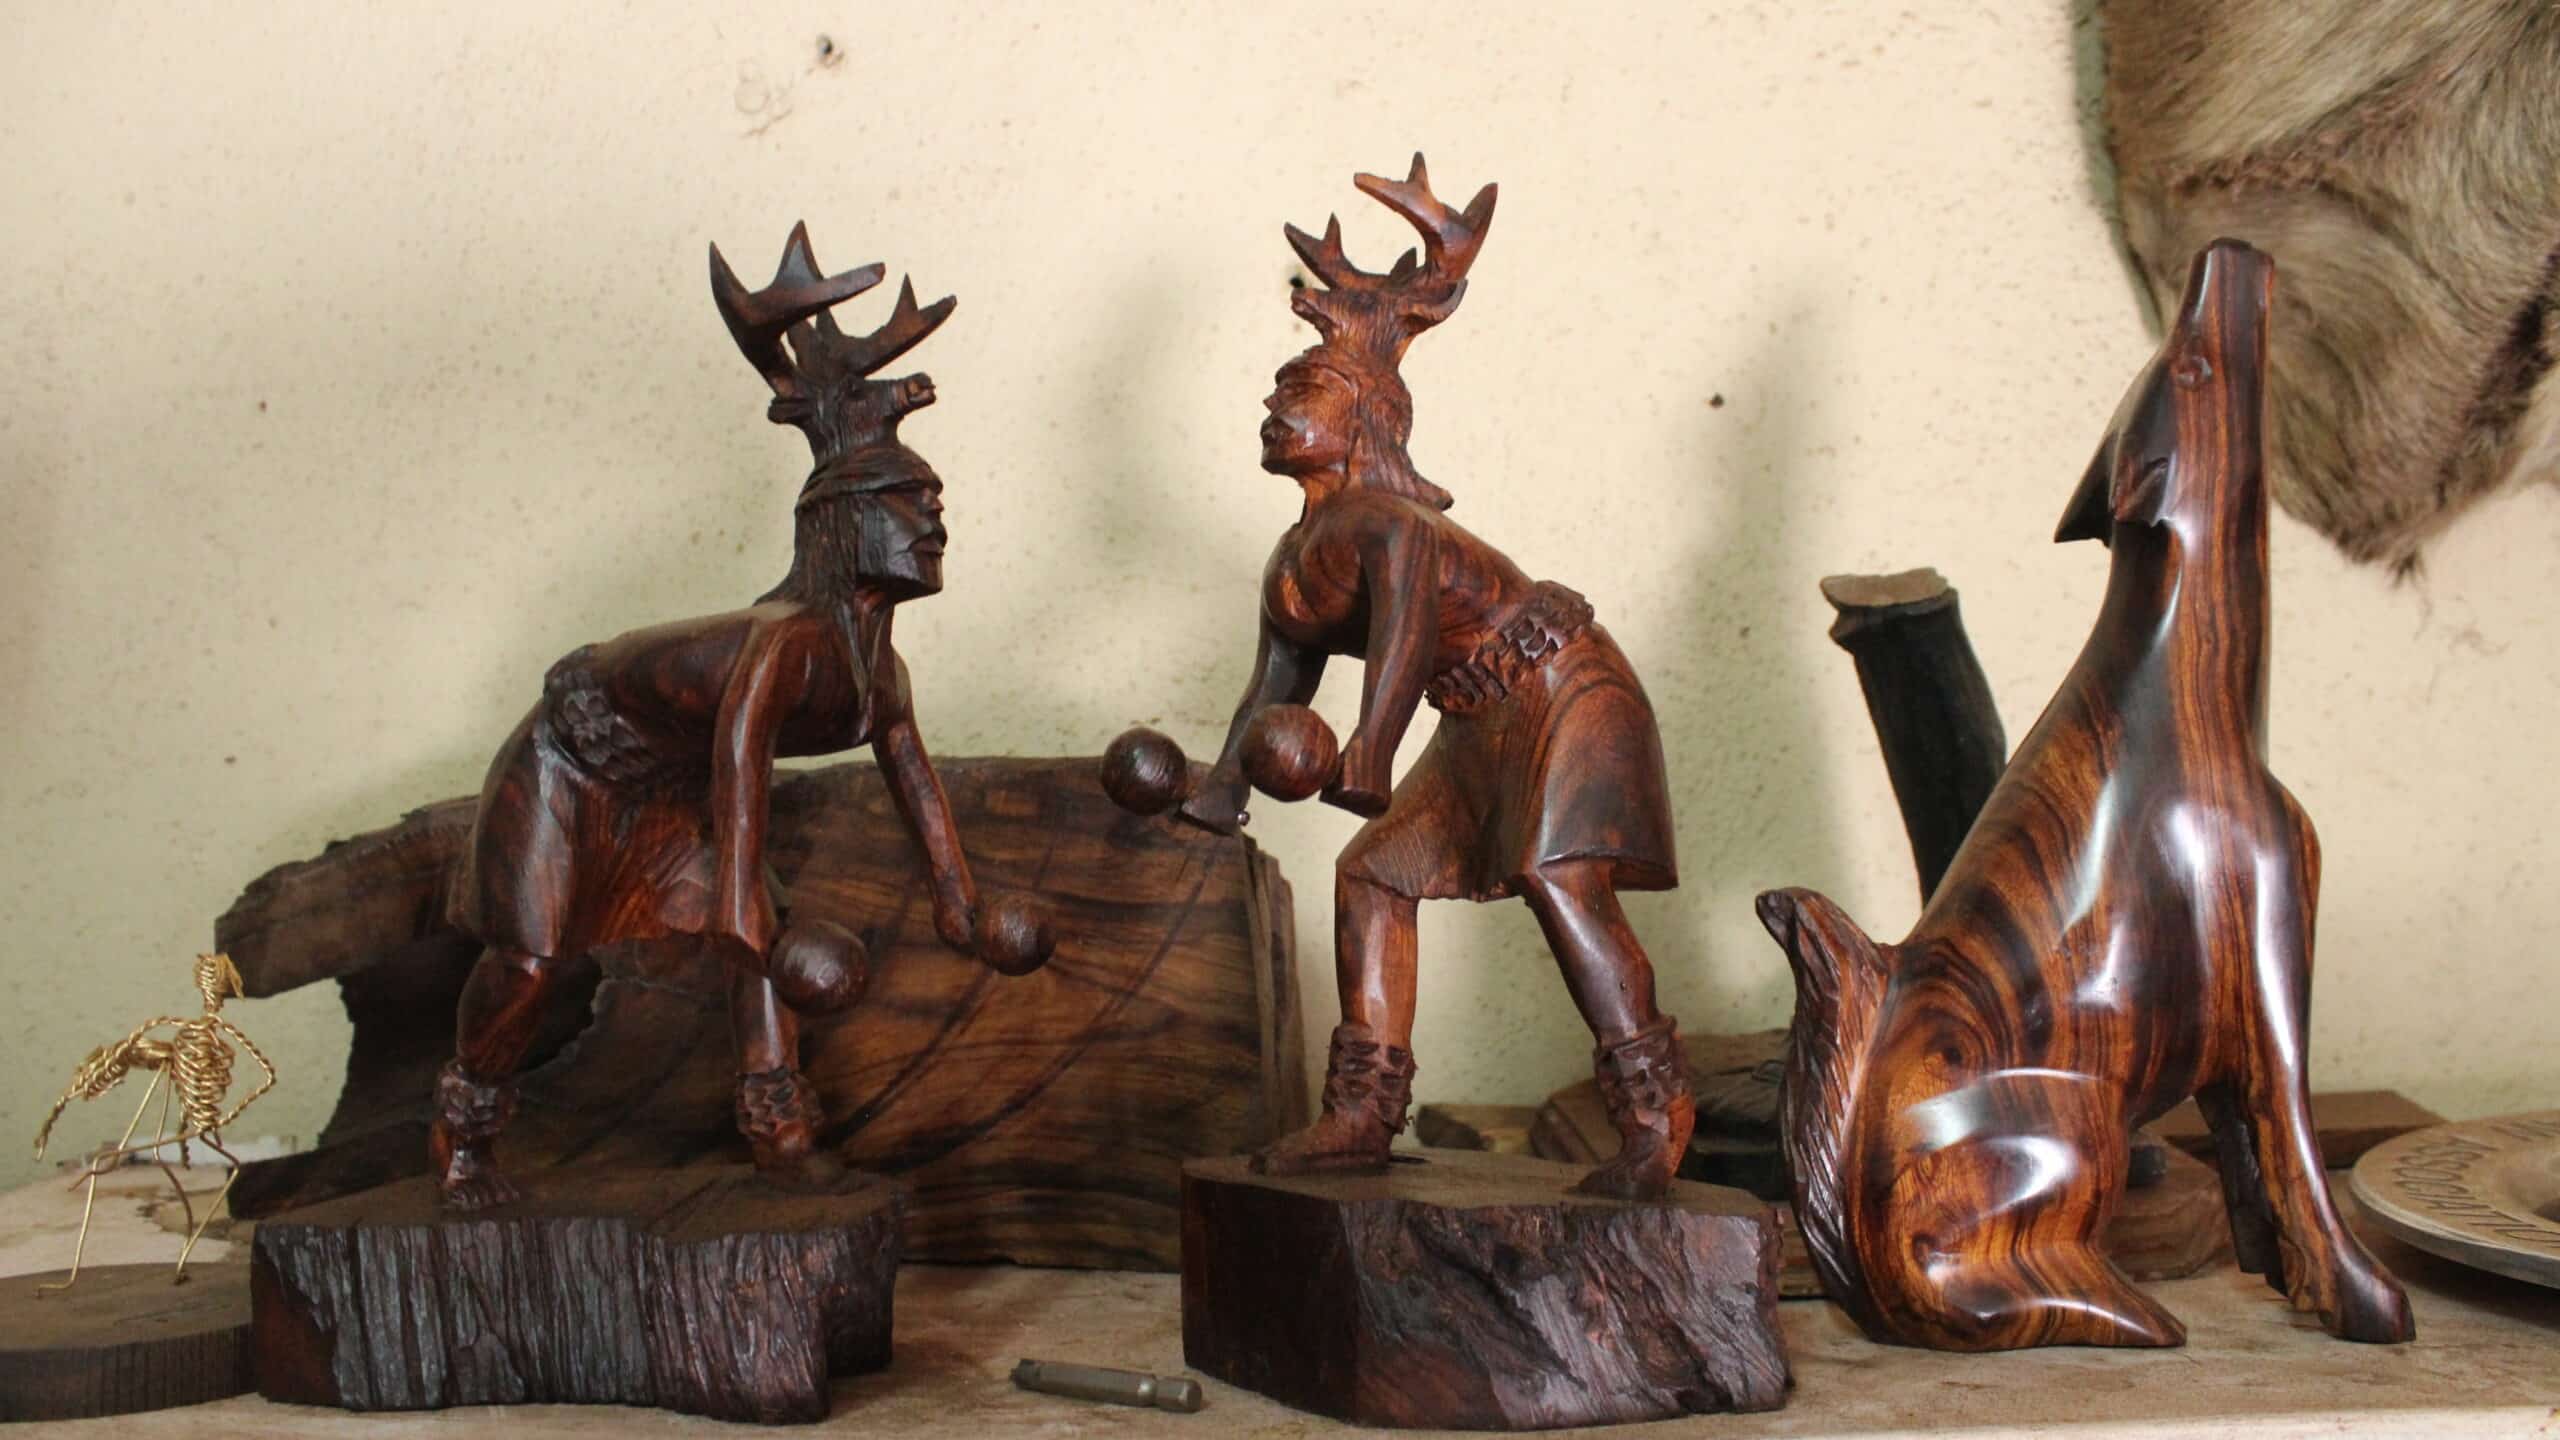 Artesanías de figuras talladas en madera en Arteaga. Foto: gob.mx